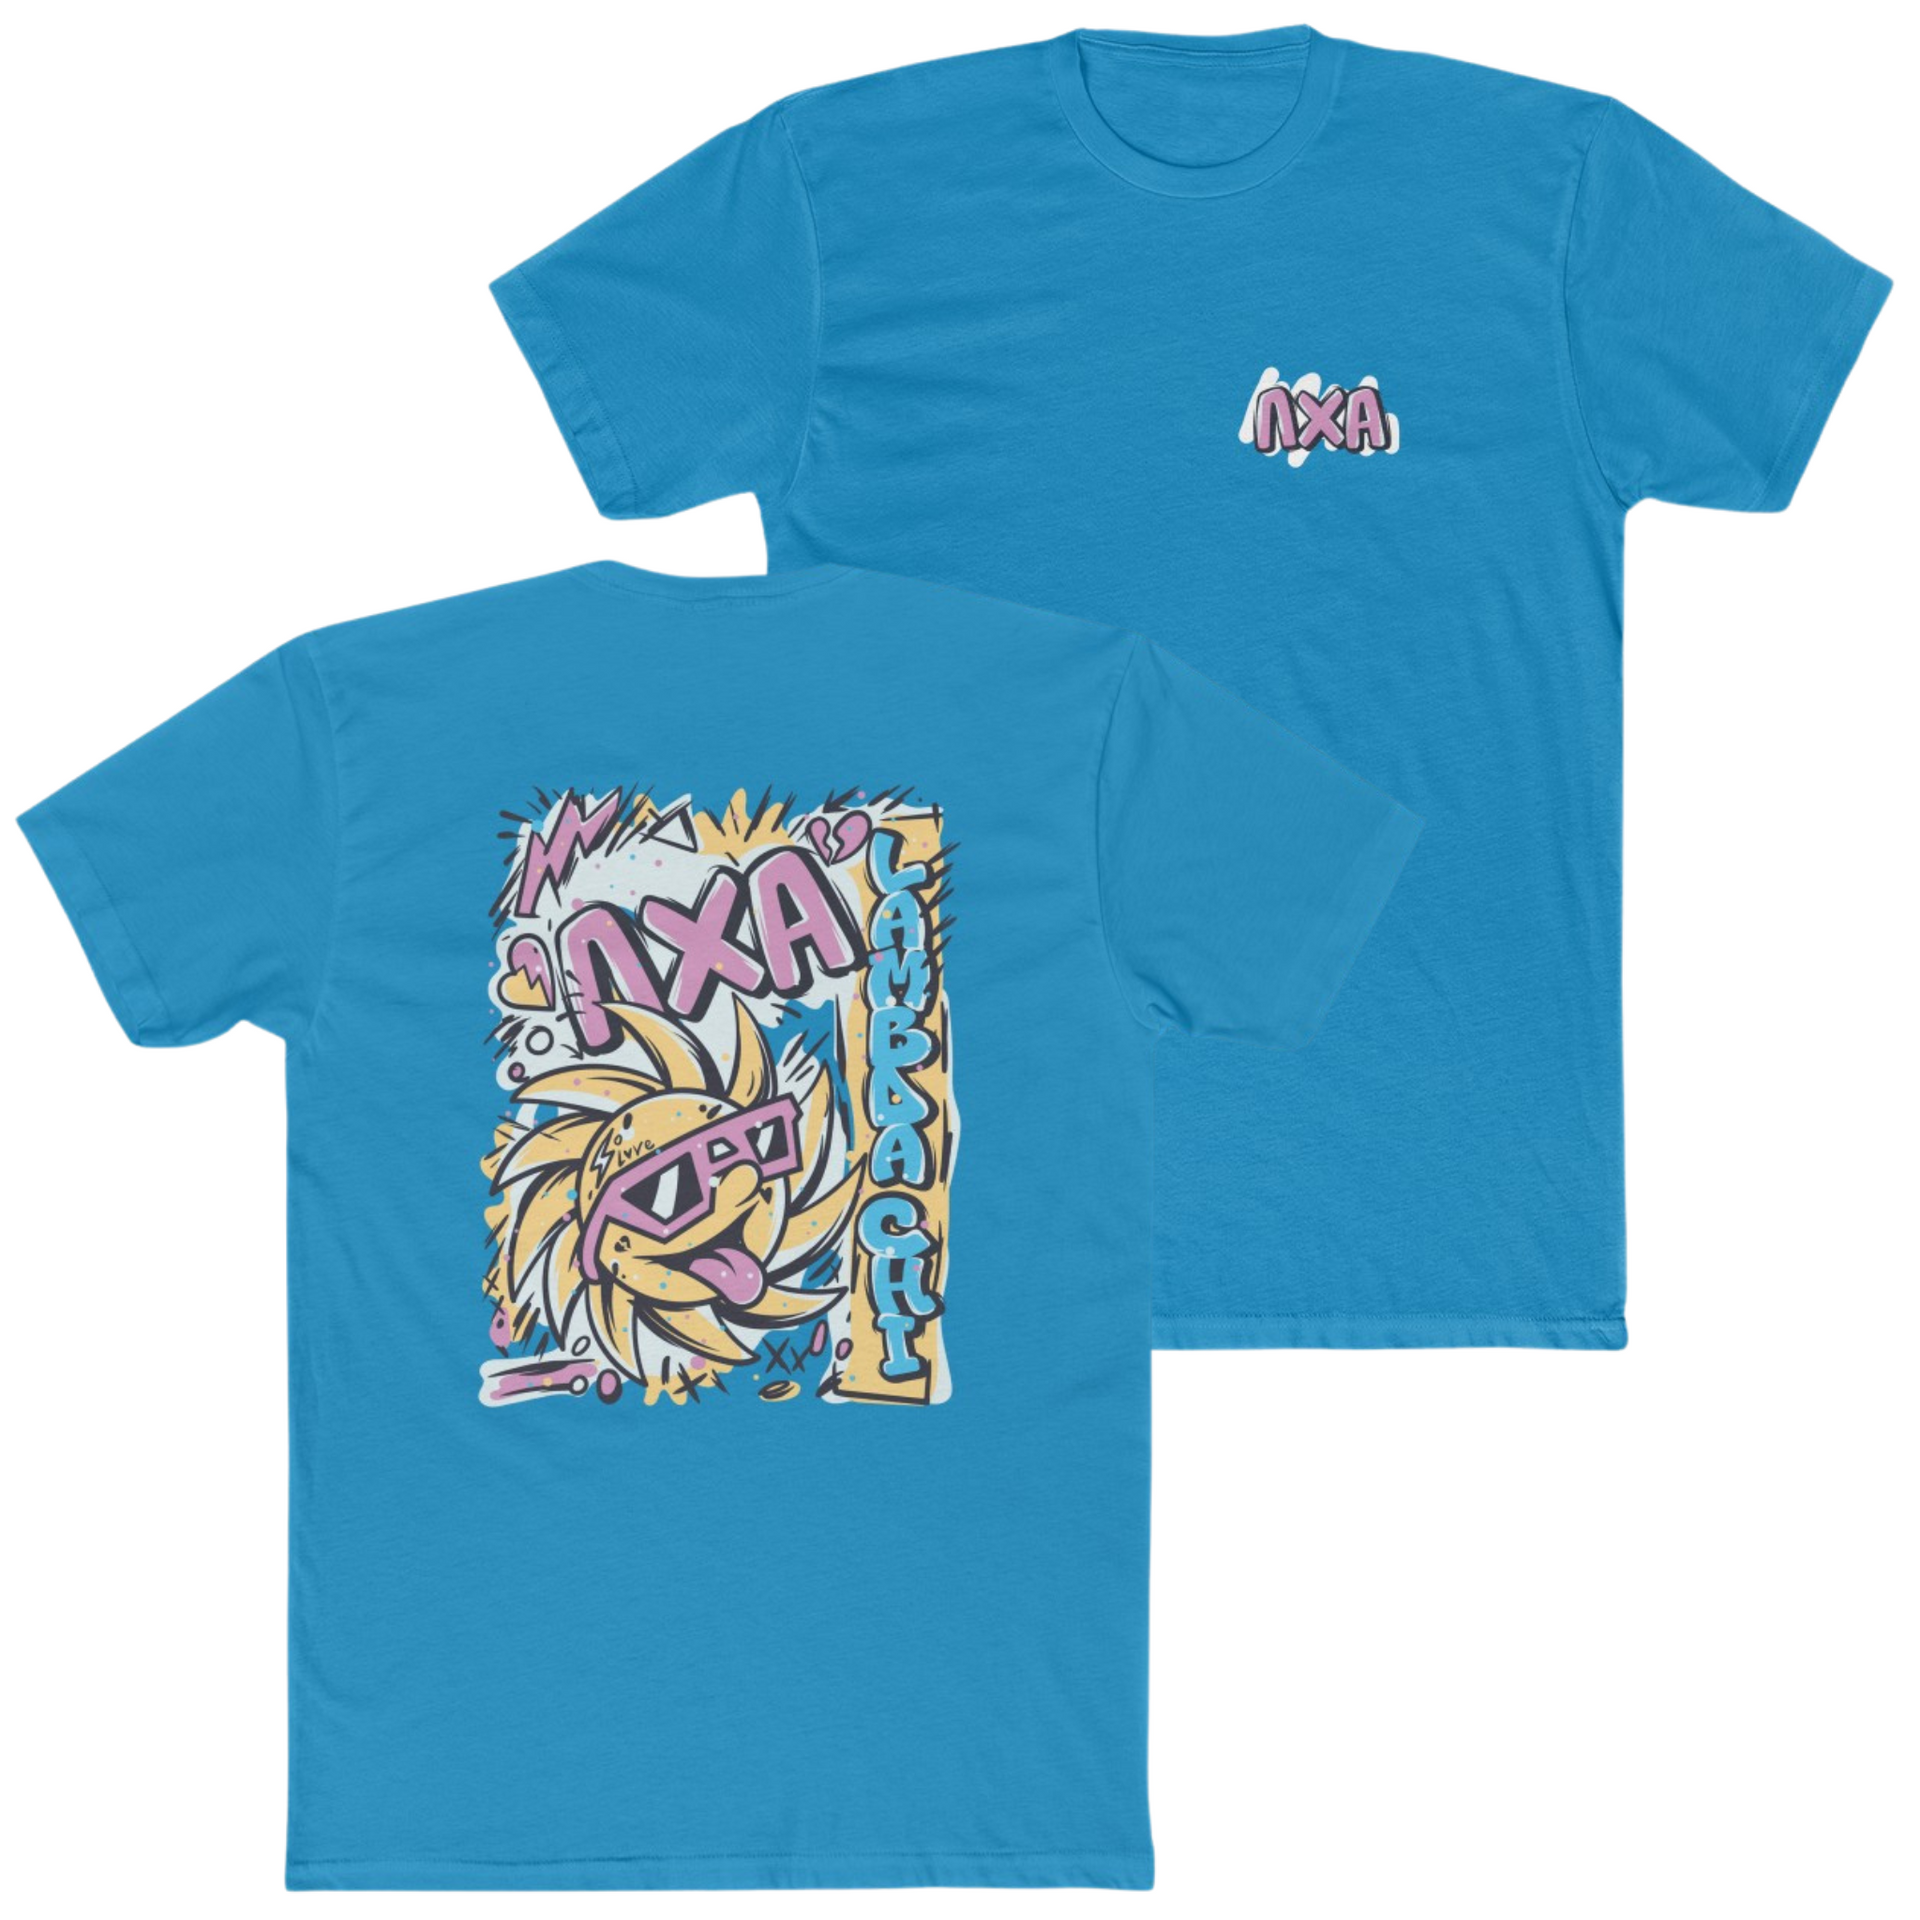 Turquoise Lambda Chi Alpha Graphic T-Shirt | Fun in the Sun | Lambda Chi Alpha Fraternity Apparel 